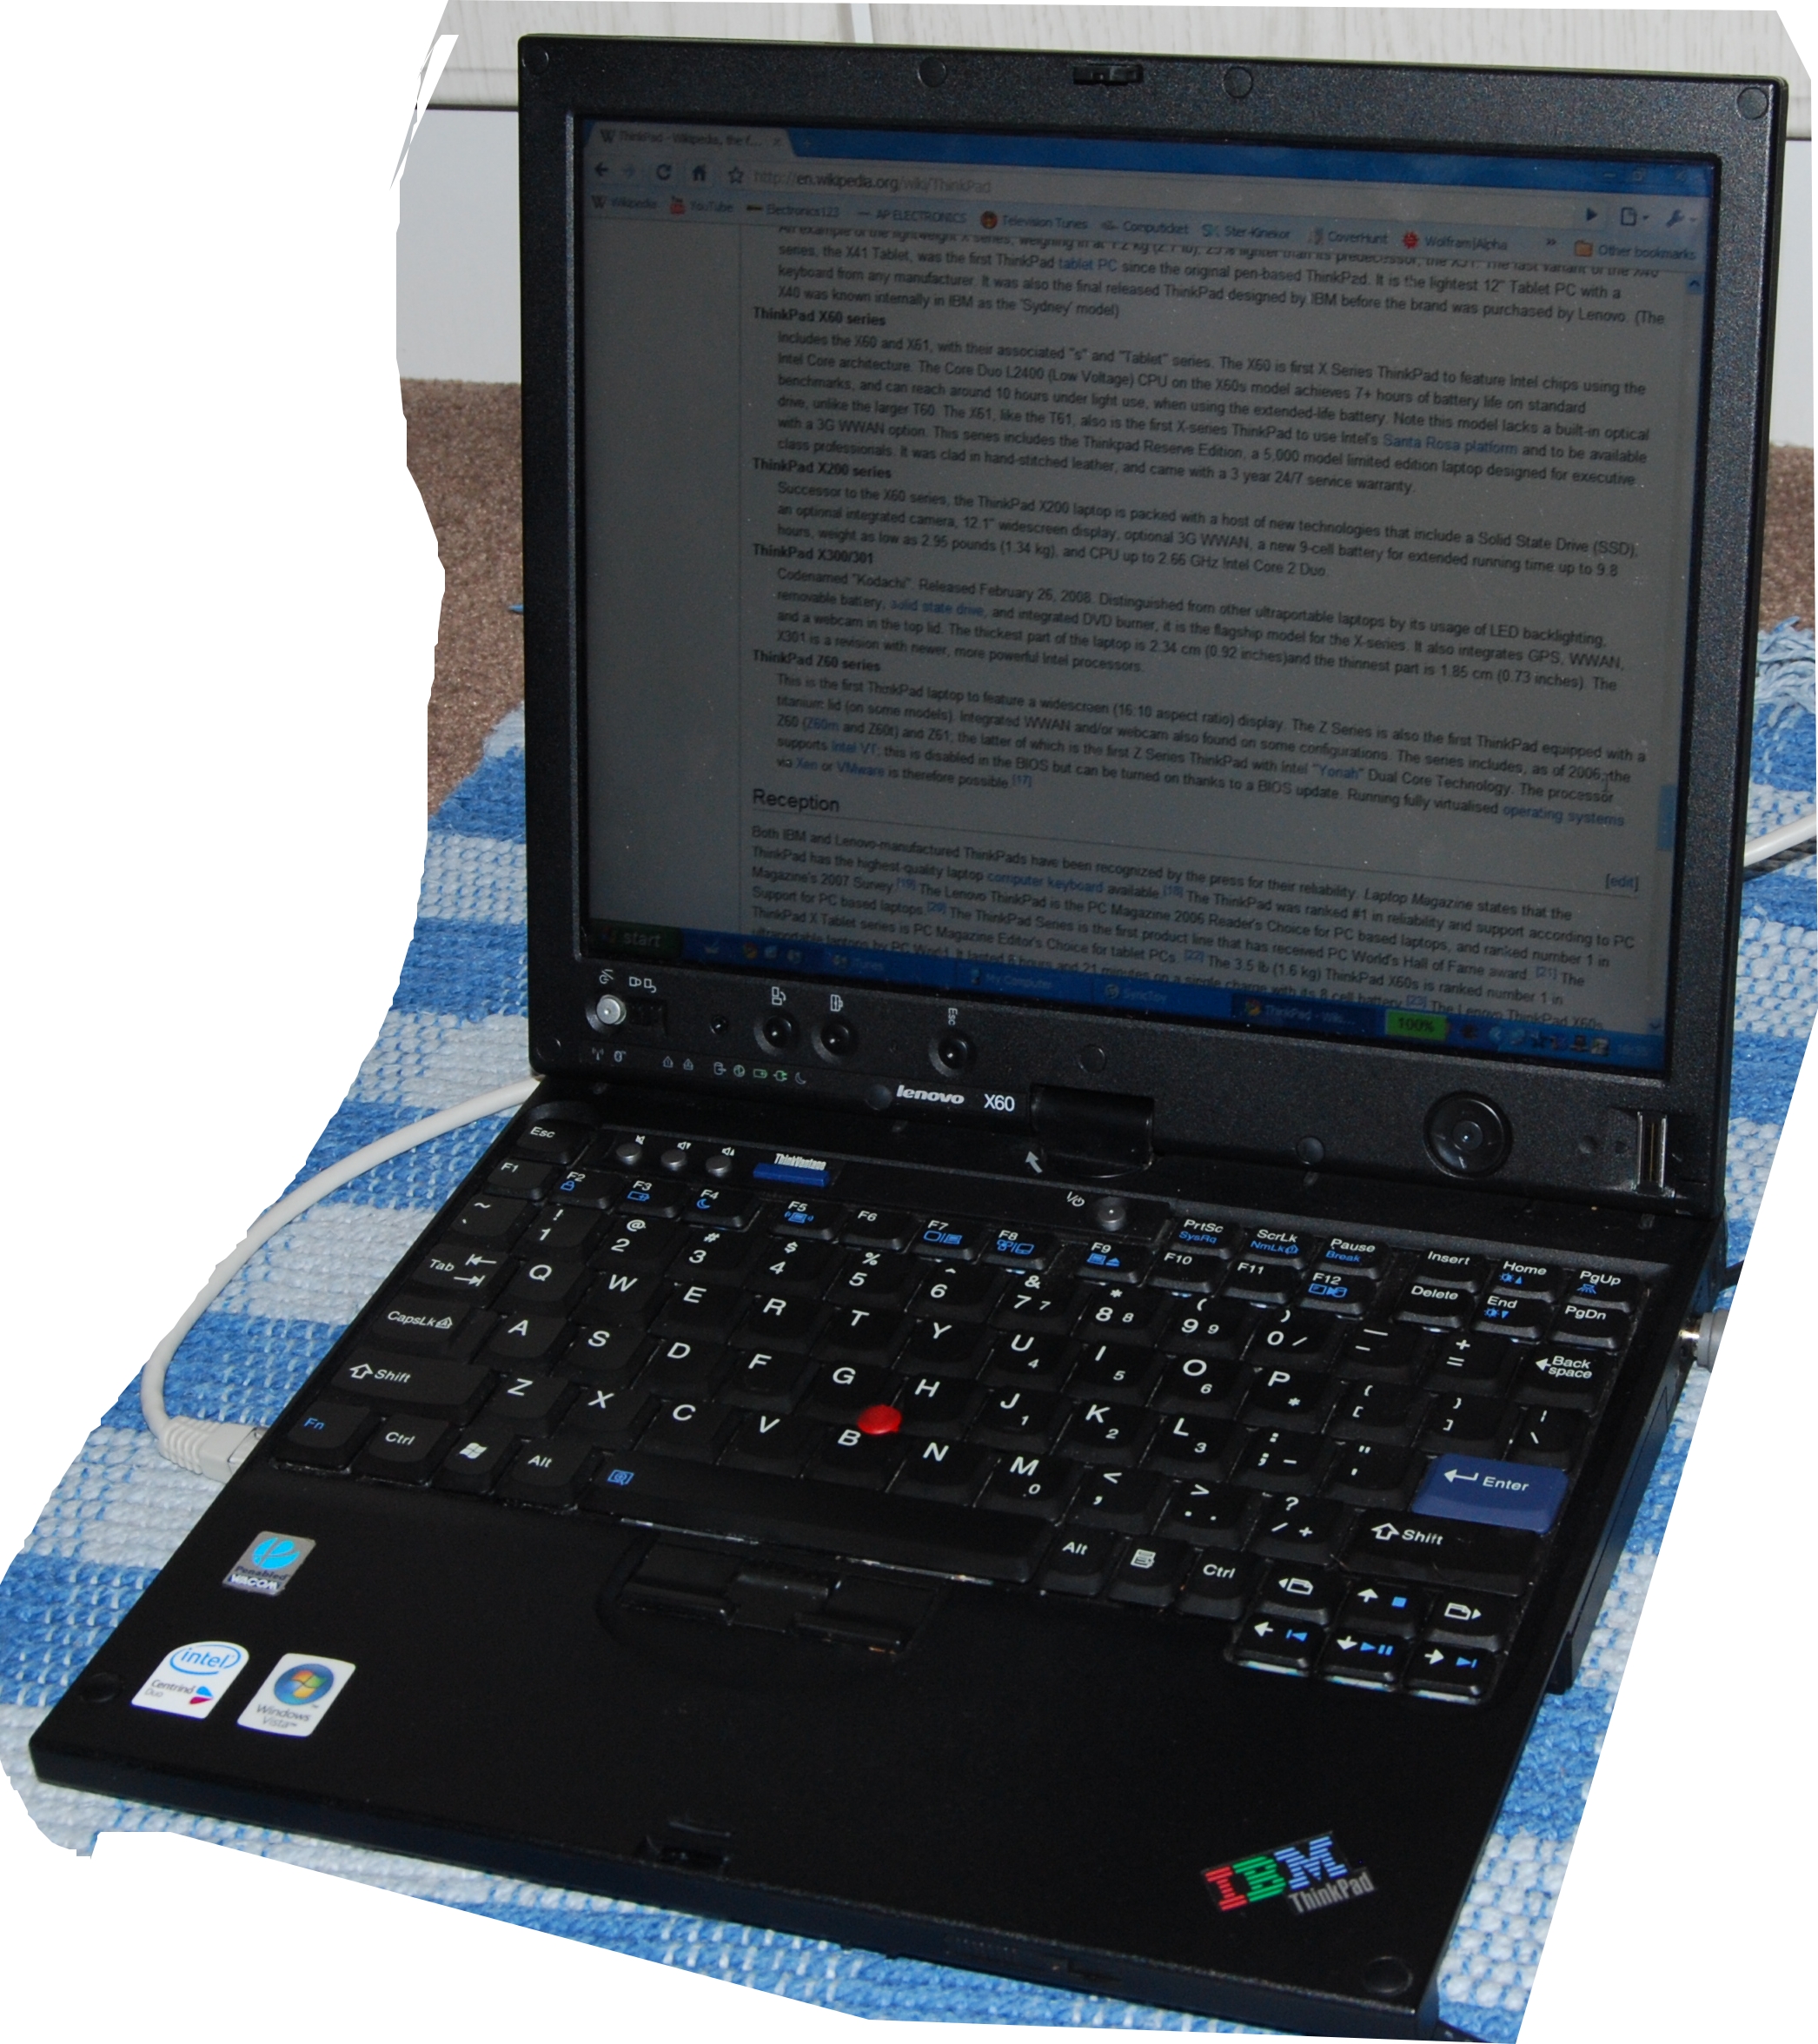 File:Lenovo X60 open.JPG - Wikipedia